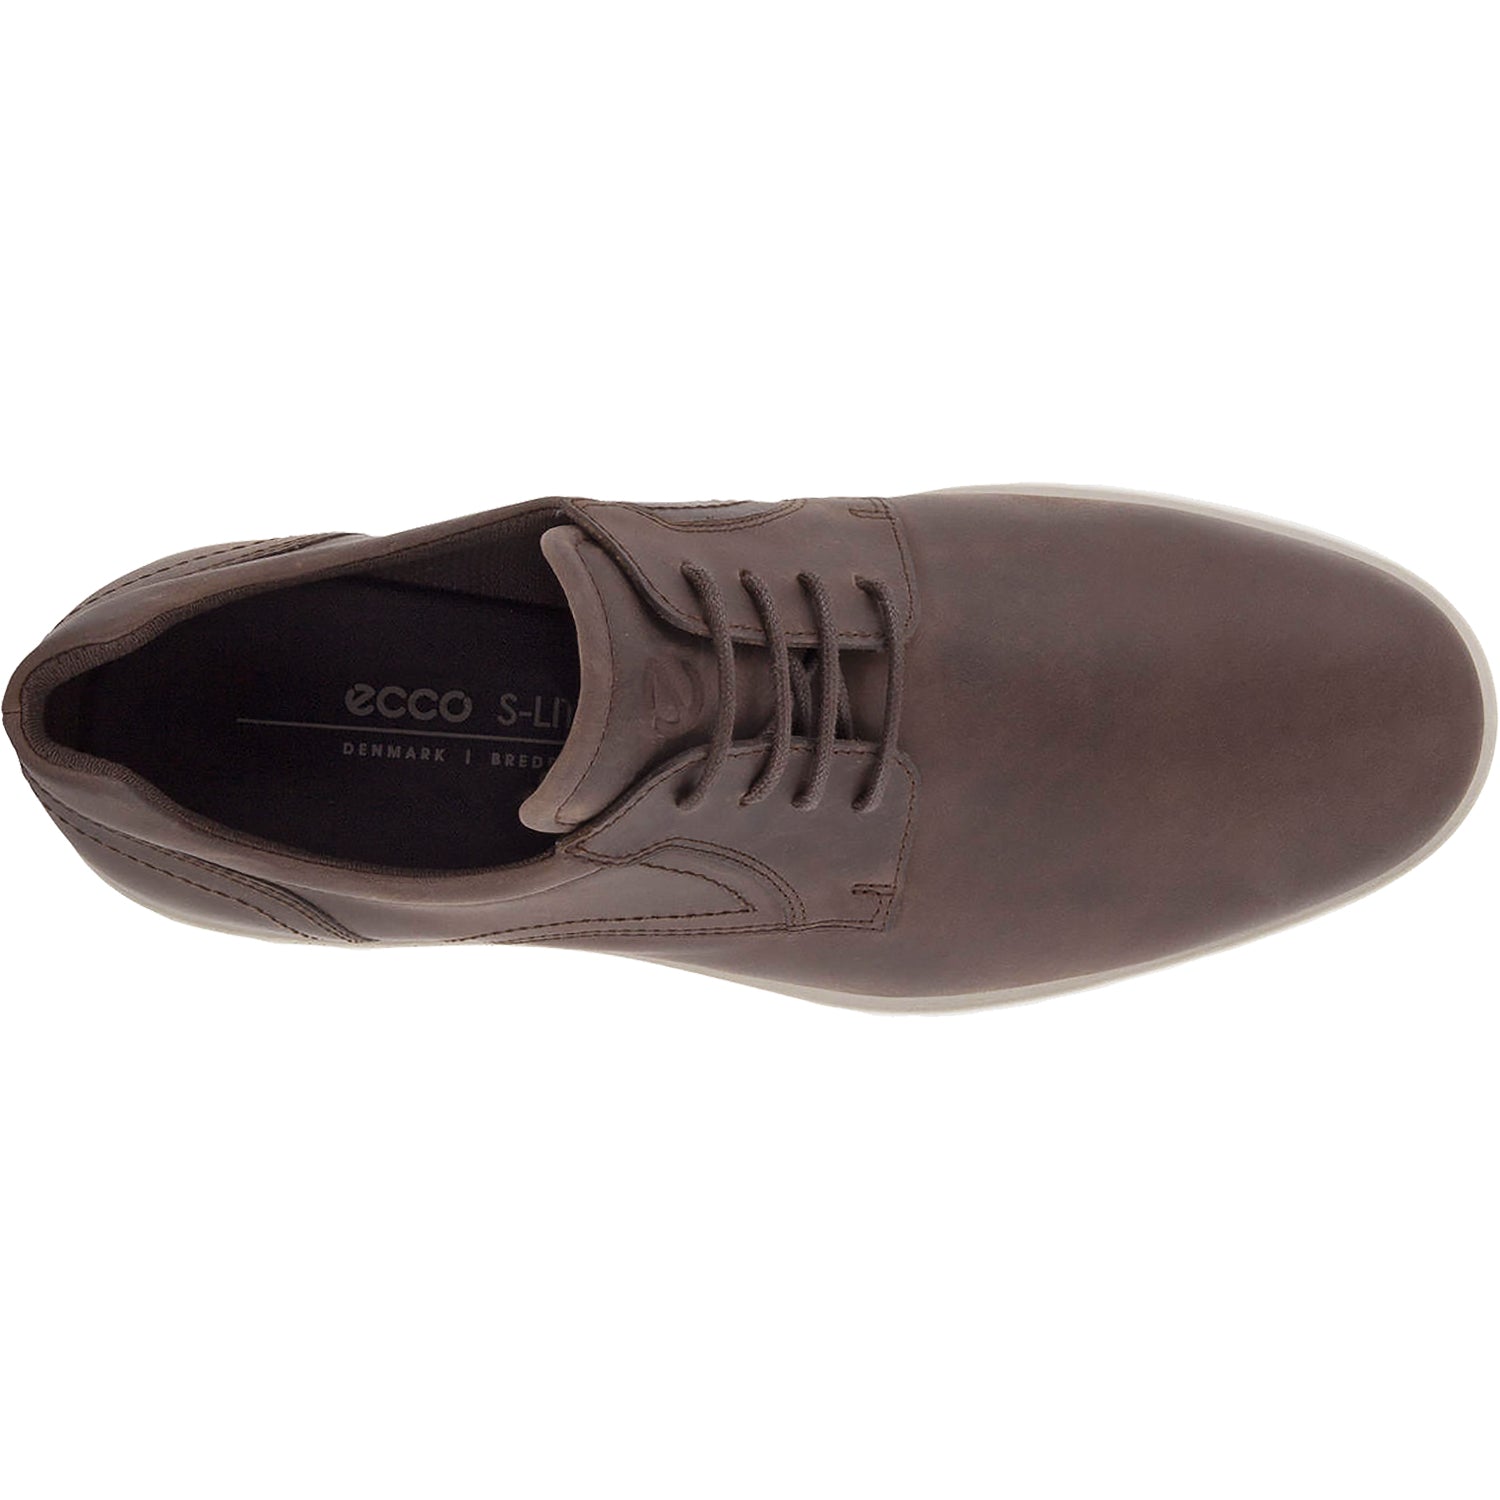 Ecco S Lite Hybrid Derby | Men's Casual Shoes | Footwear